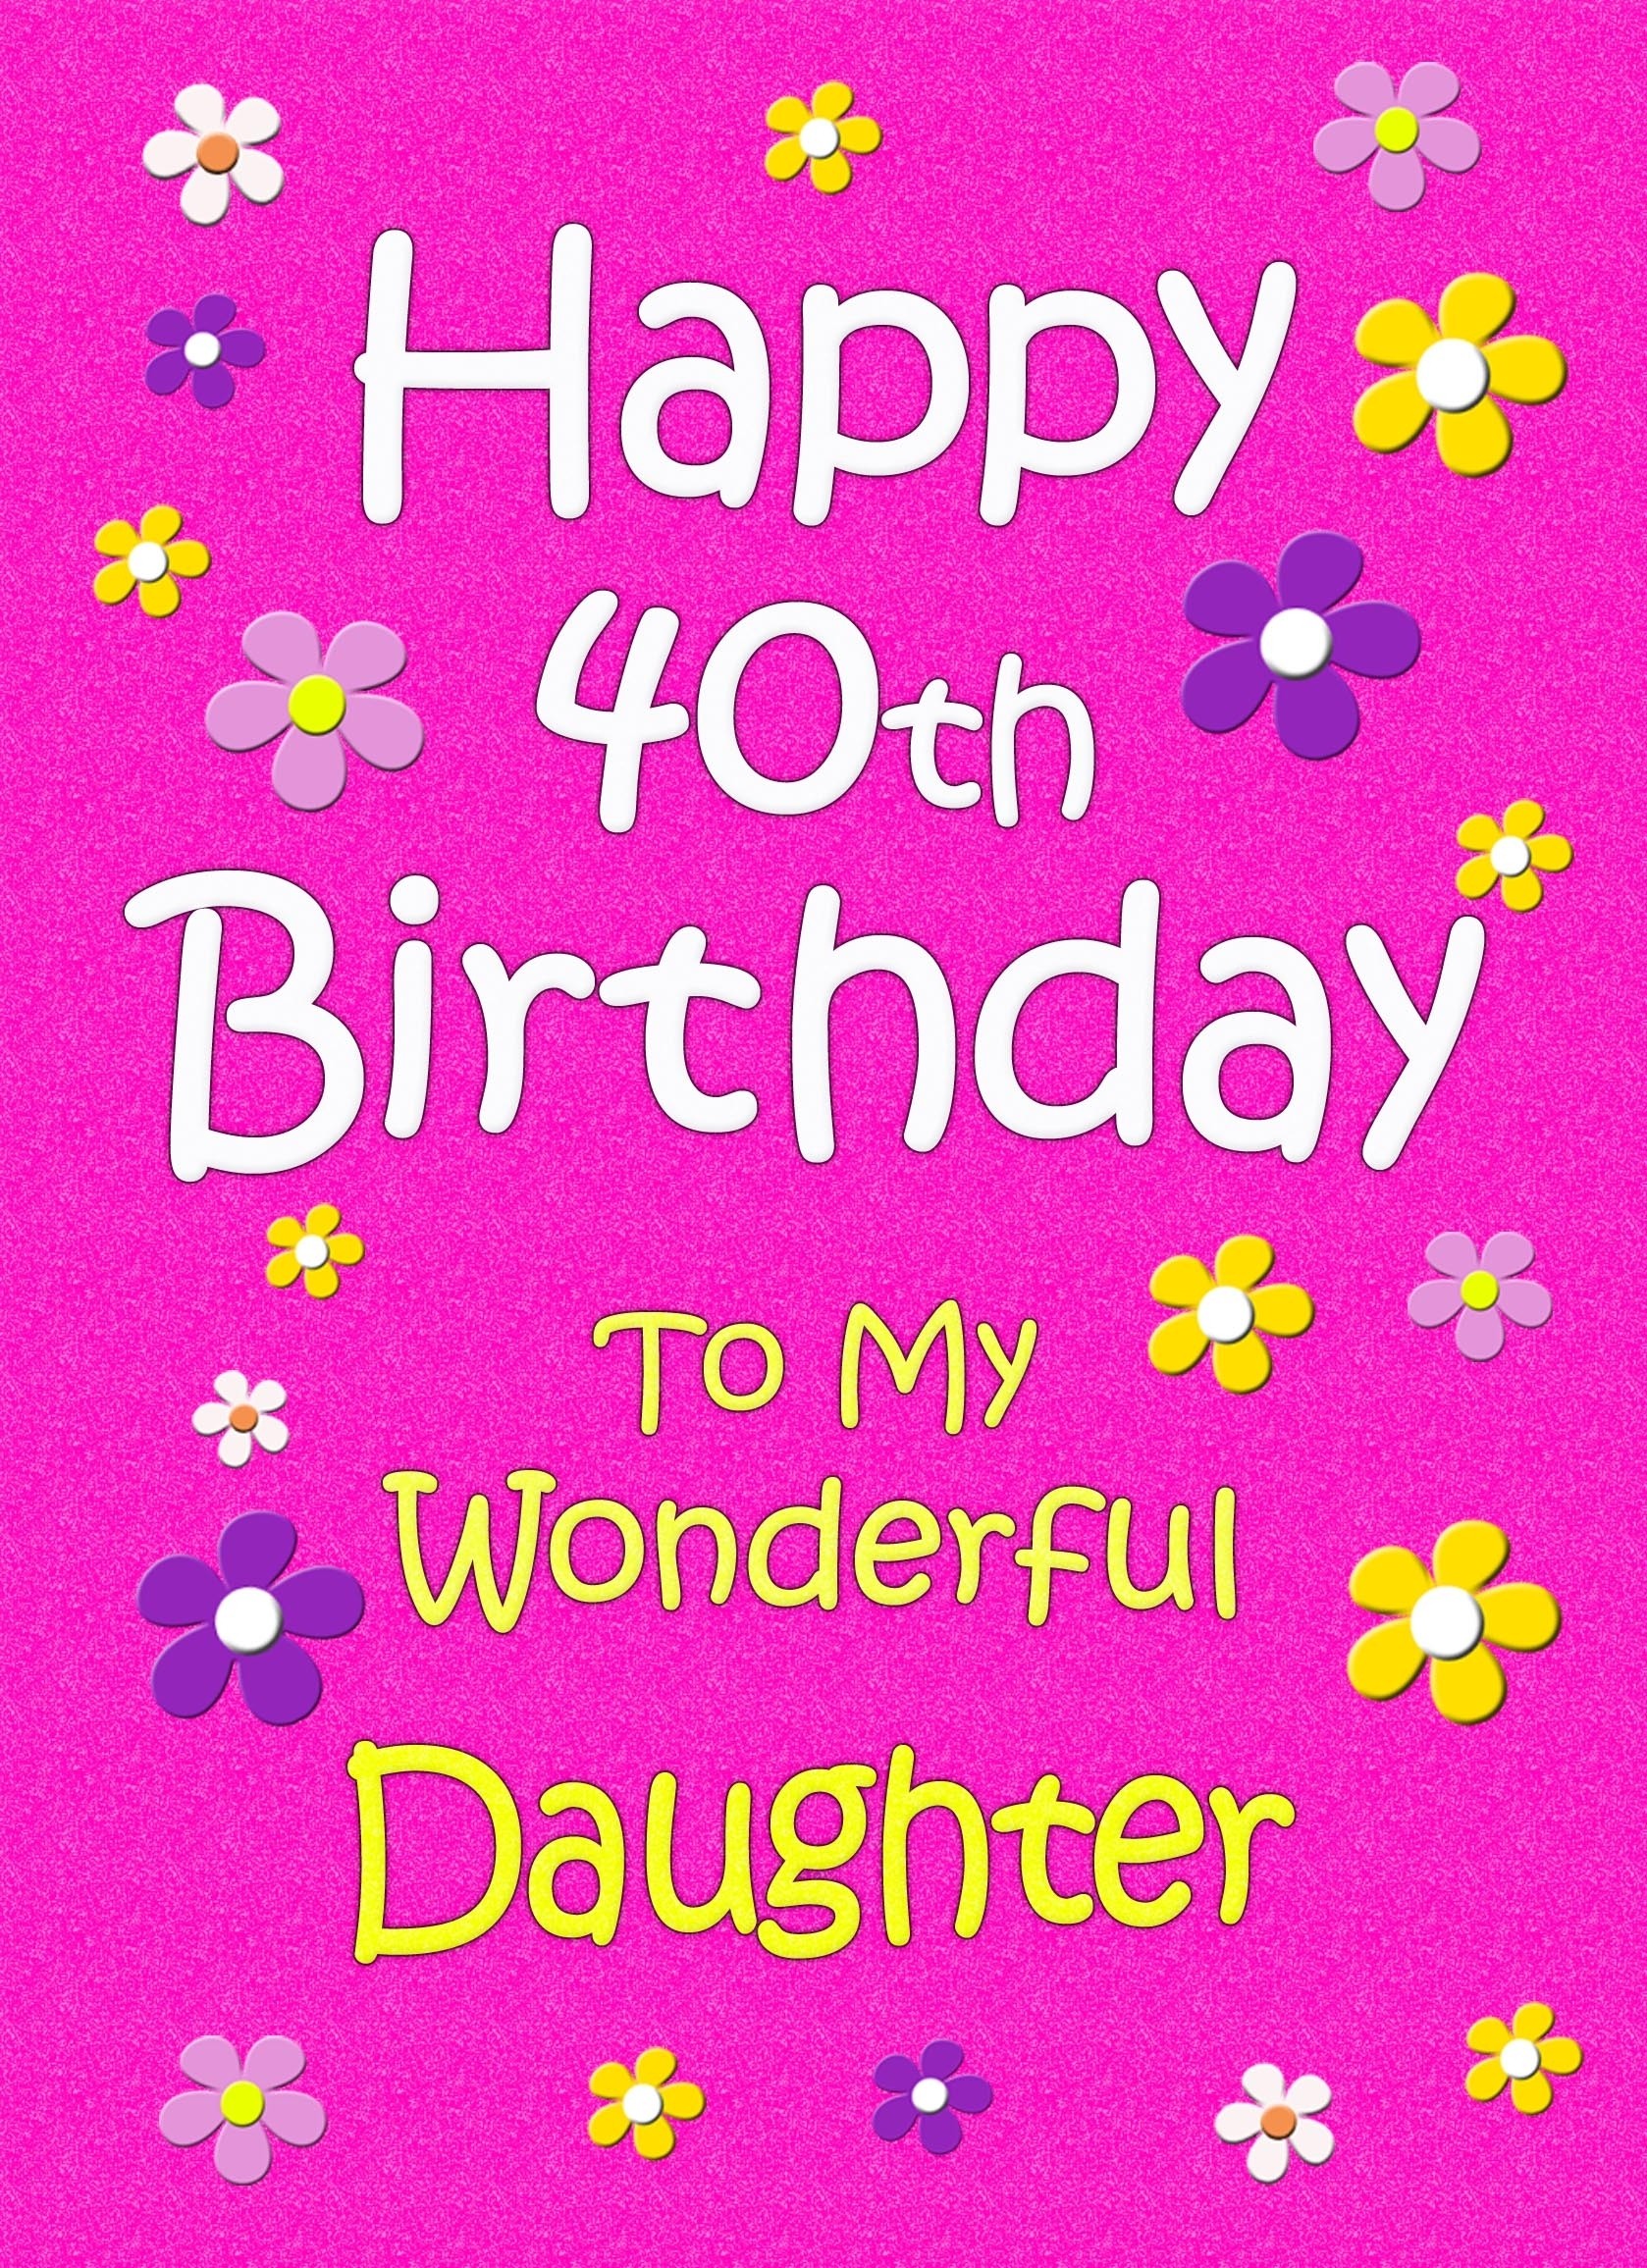 Daughter 40th Birthday Card (Pink)